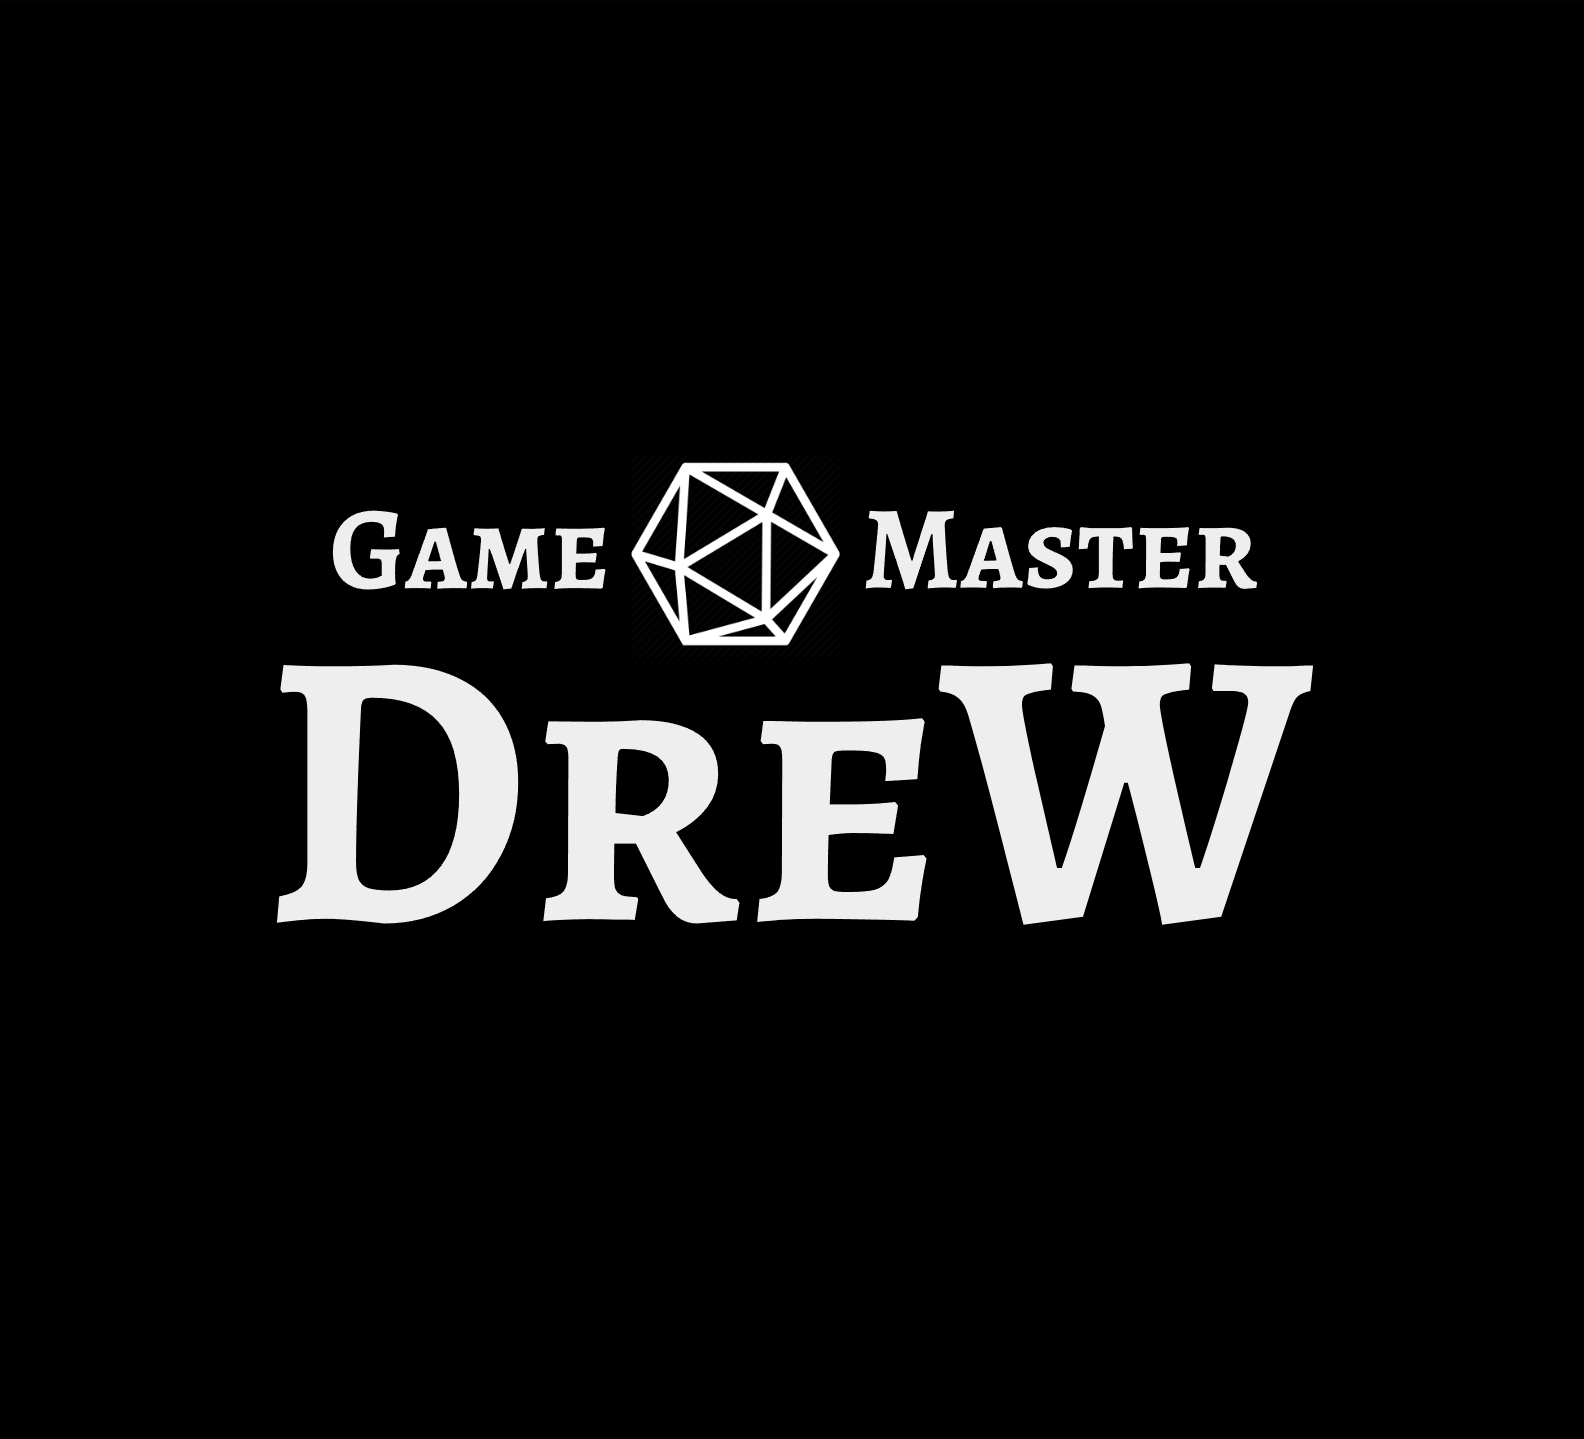 Game Master Drew